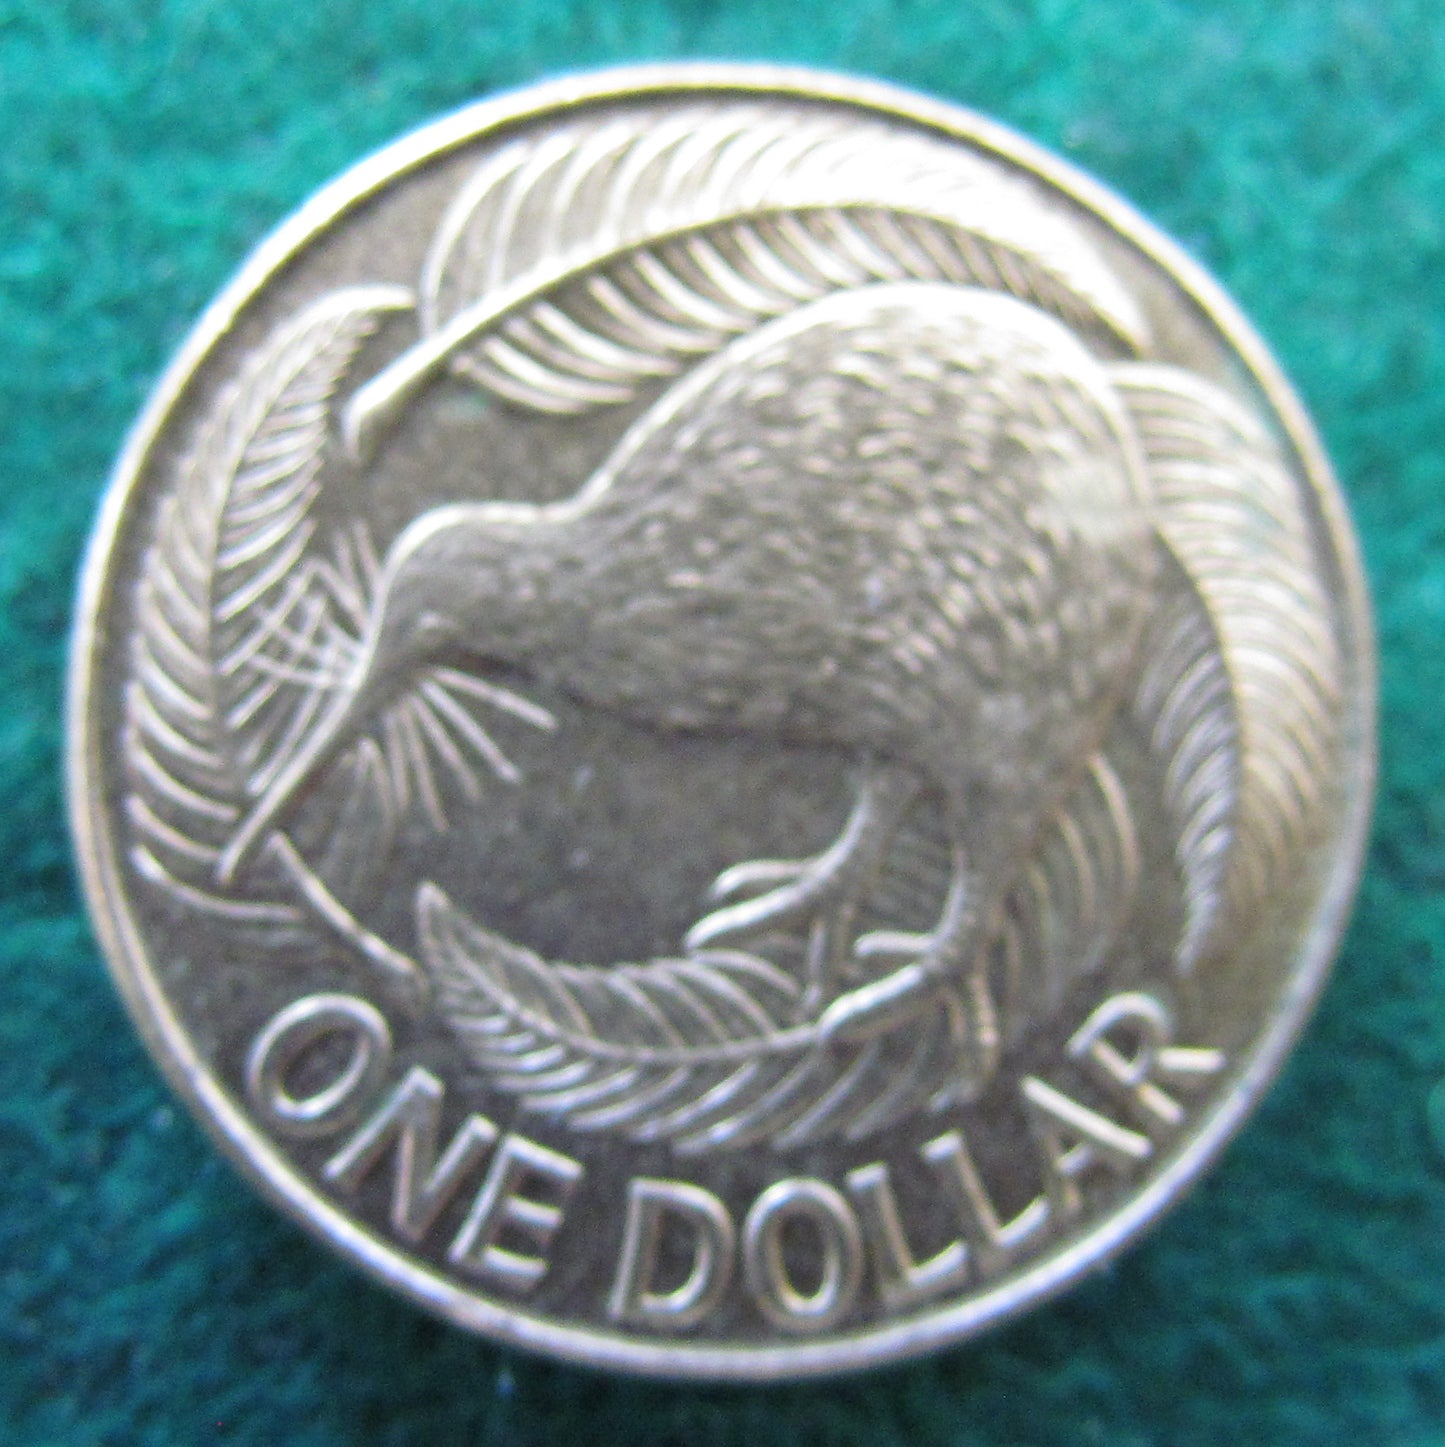 New Zealand 1990 One Dollar Queen Elizabeth Coin